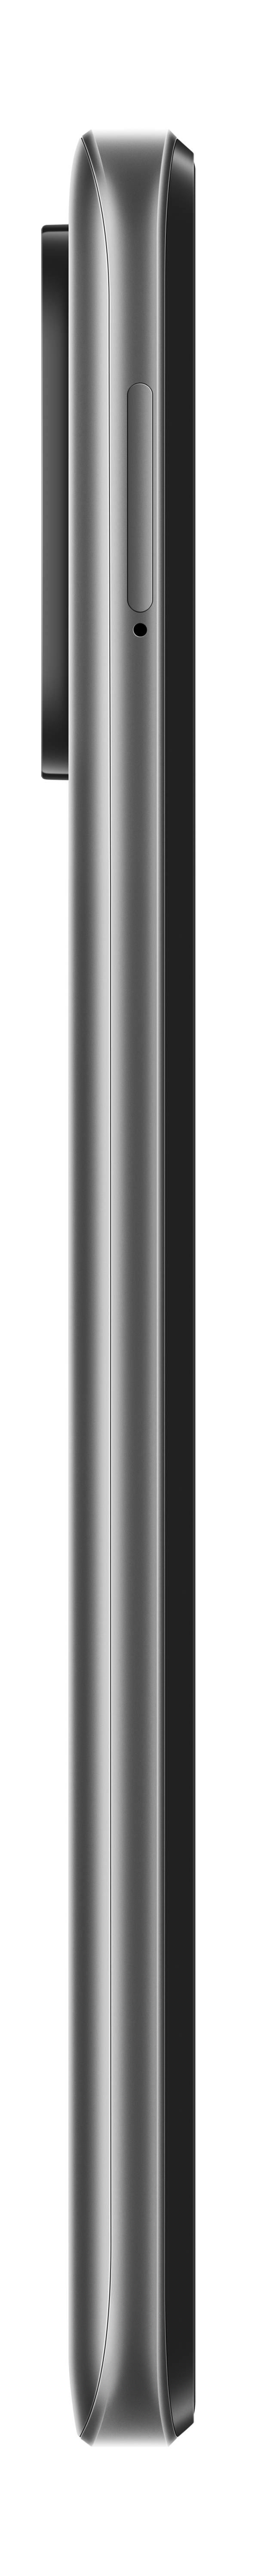 XIAOMI Redmi 10 2022 GB 128 Carbon Dual SIM Gray